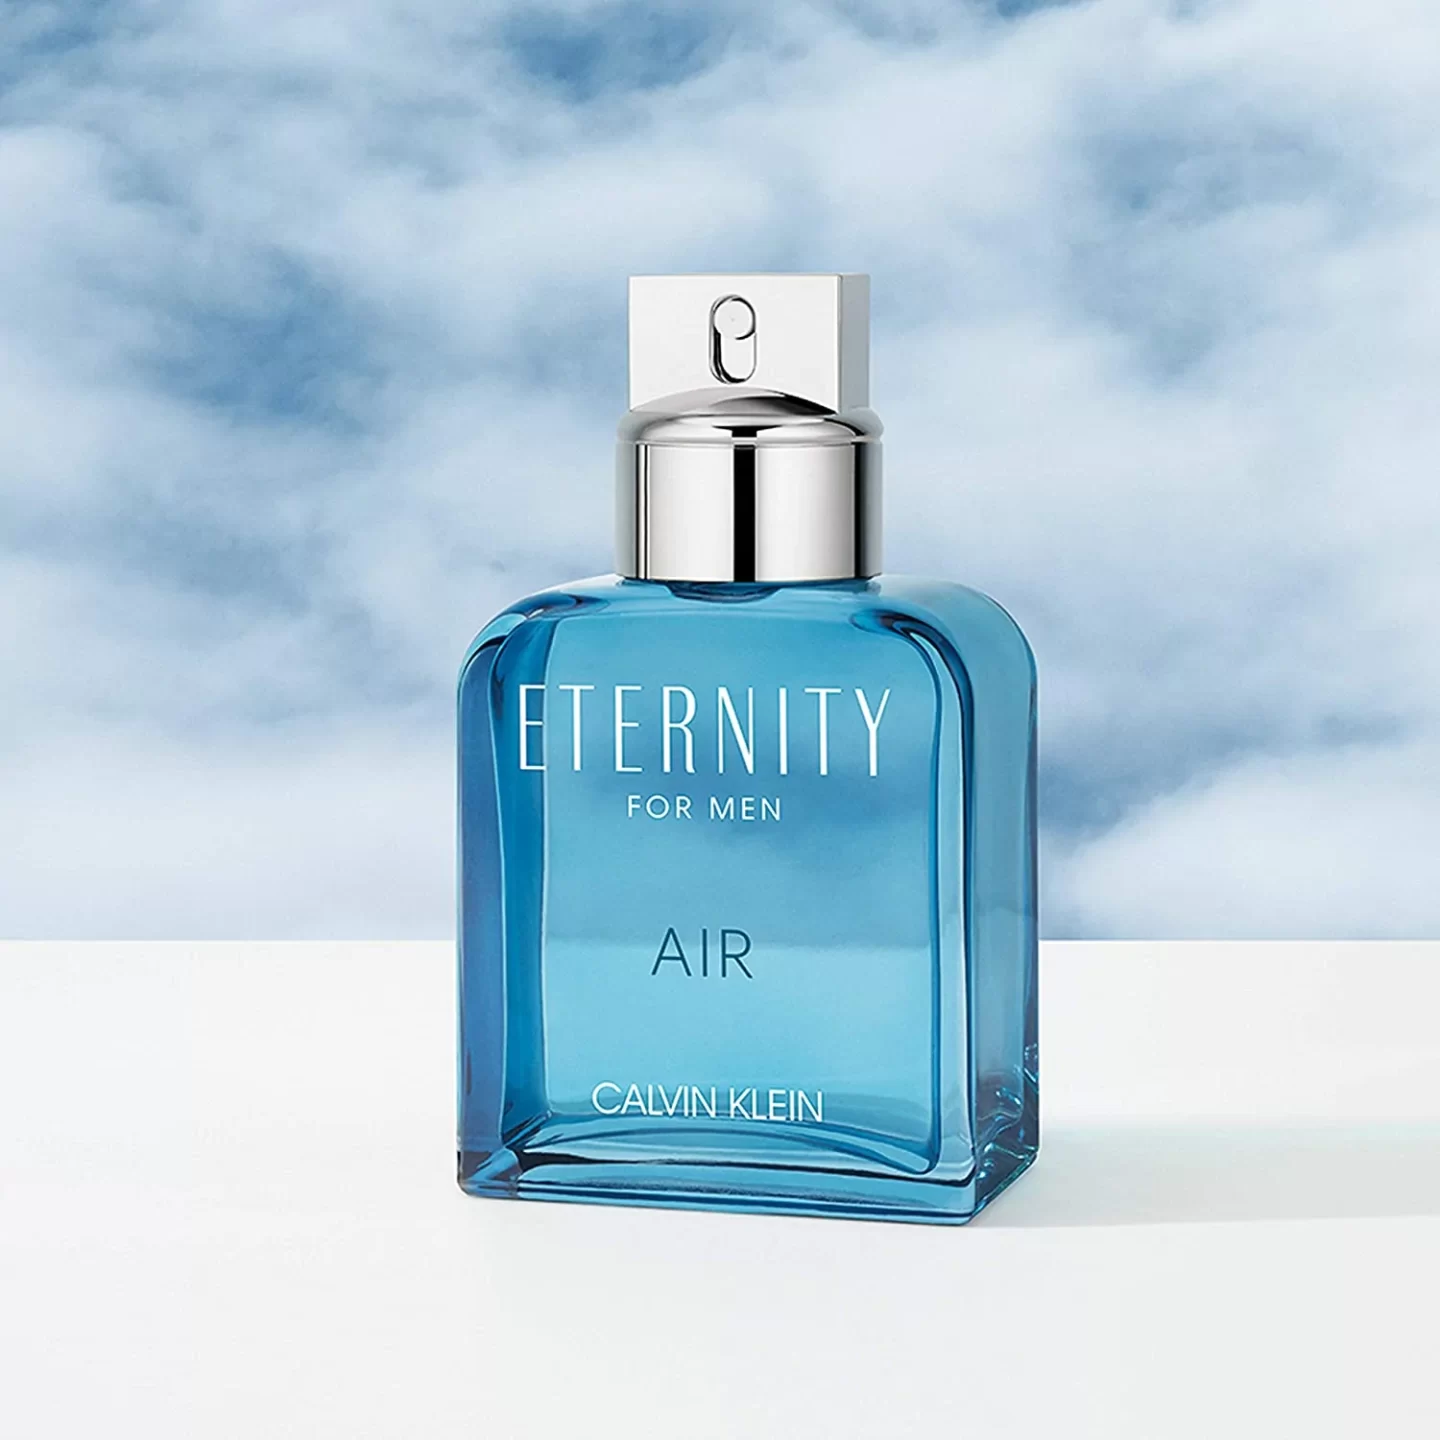 Calvin Klein Eternity Air สำหรับผู้ชาย น้ำหอม Aquatic & Oceanic ที่ดีที่สุด